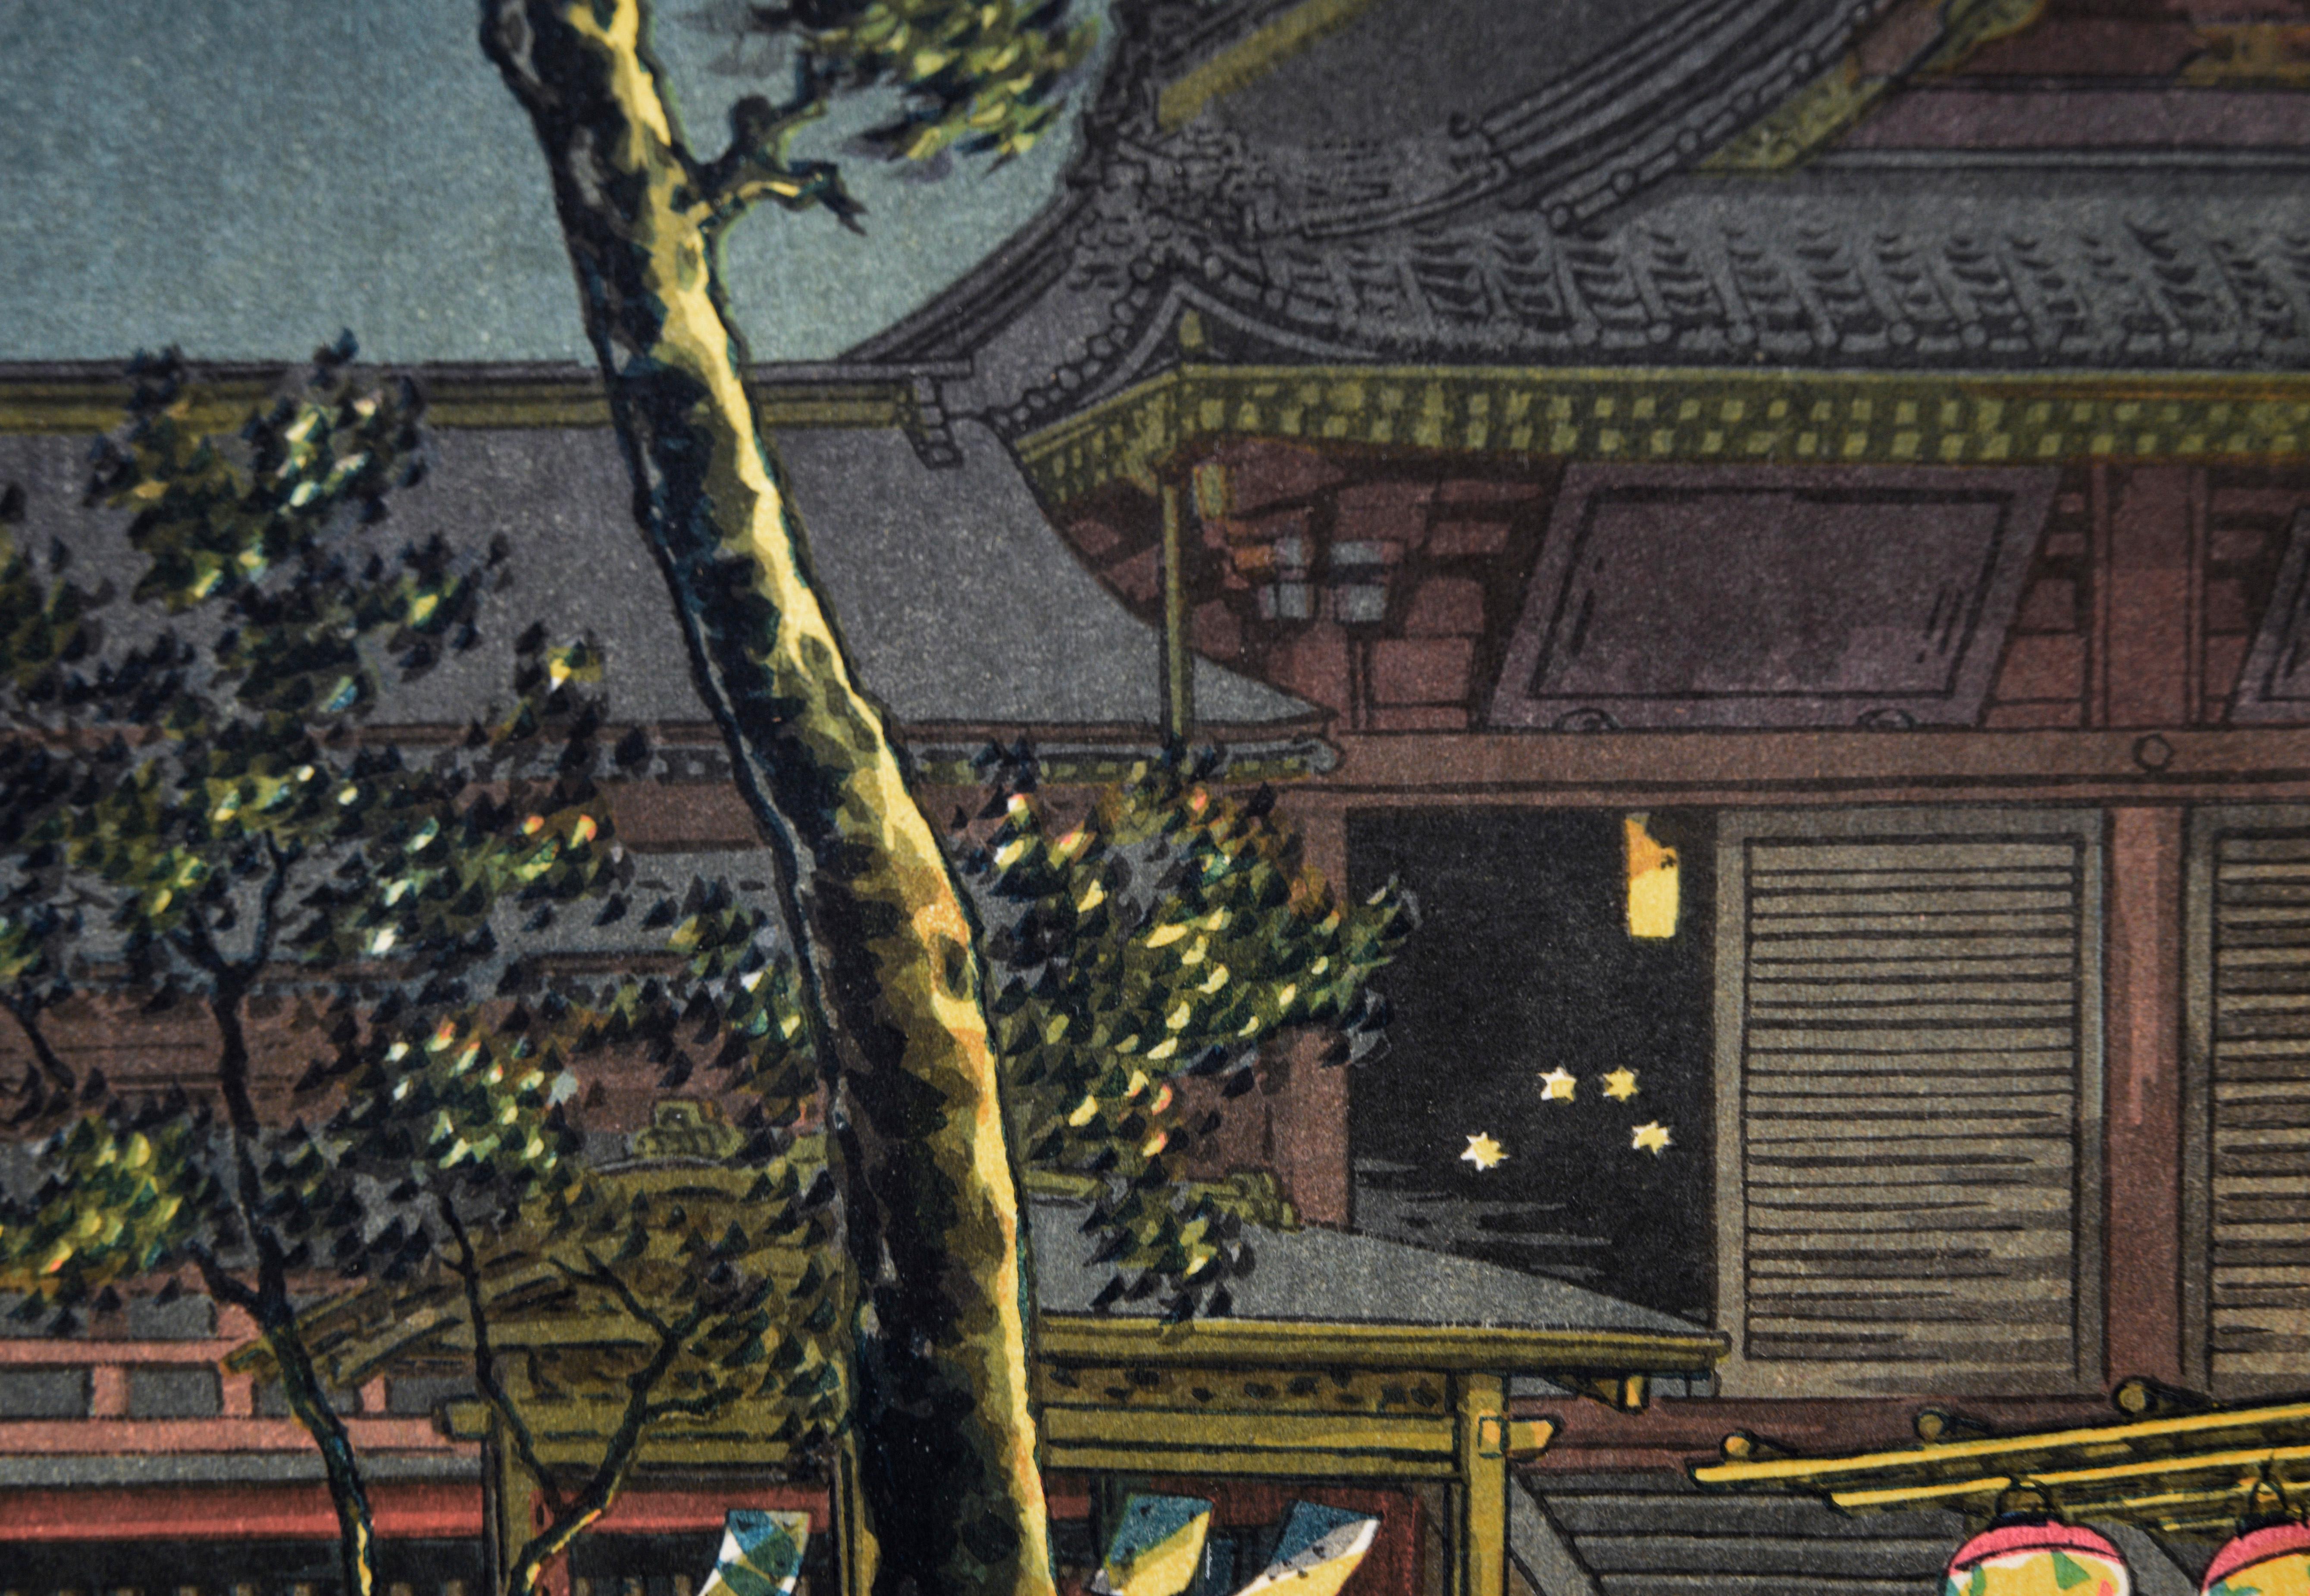 Tea Shop at Kiyomizu (Early Printing) - Nocturnal Woodblock Print on Paper 2